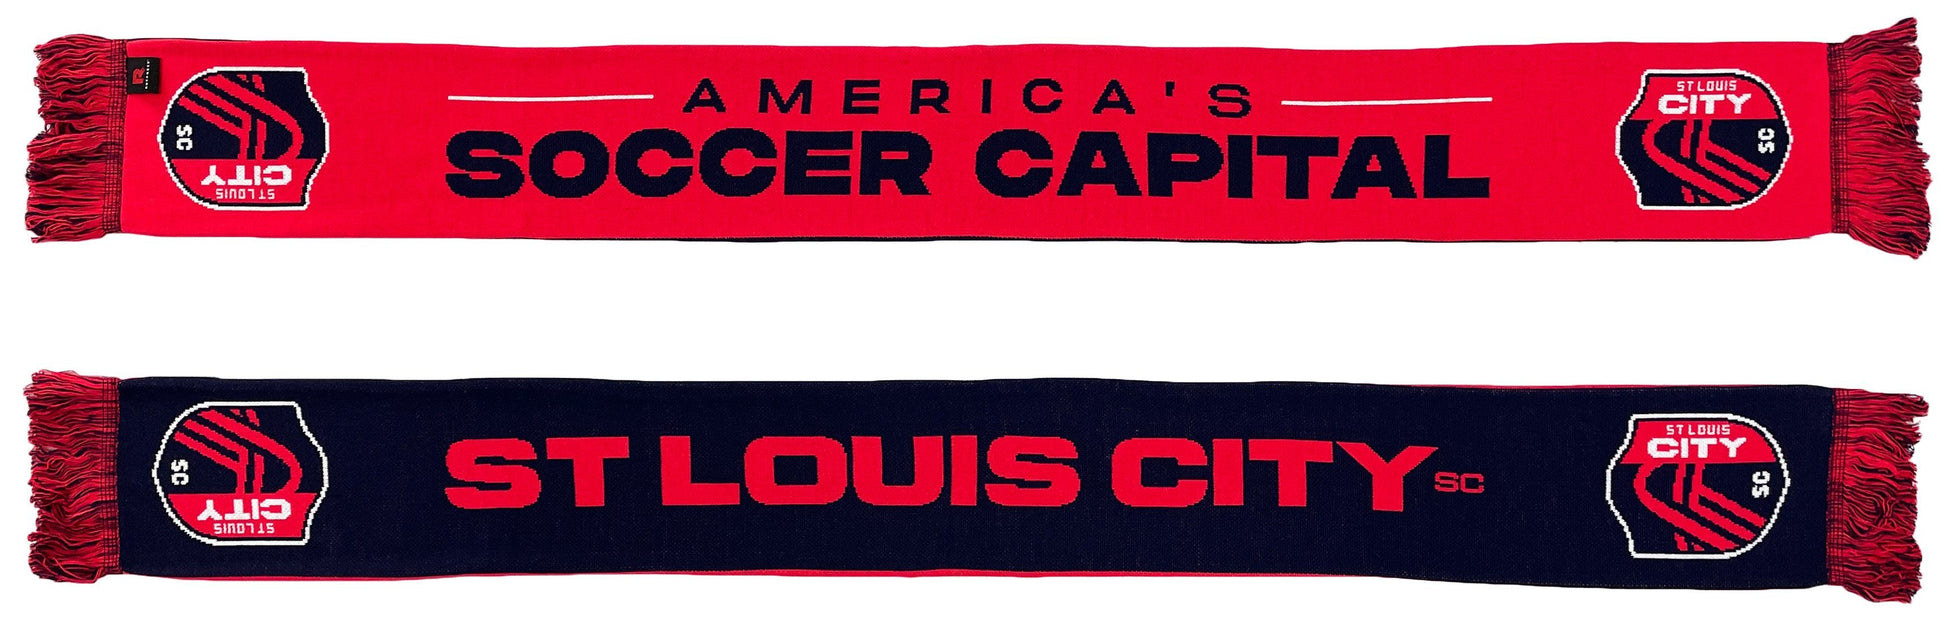 ST. LOUIS CITY SC SCARF - Soccer Capital